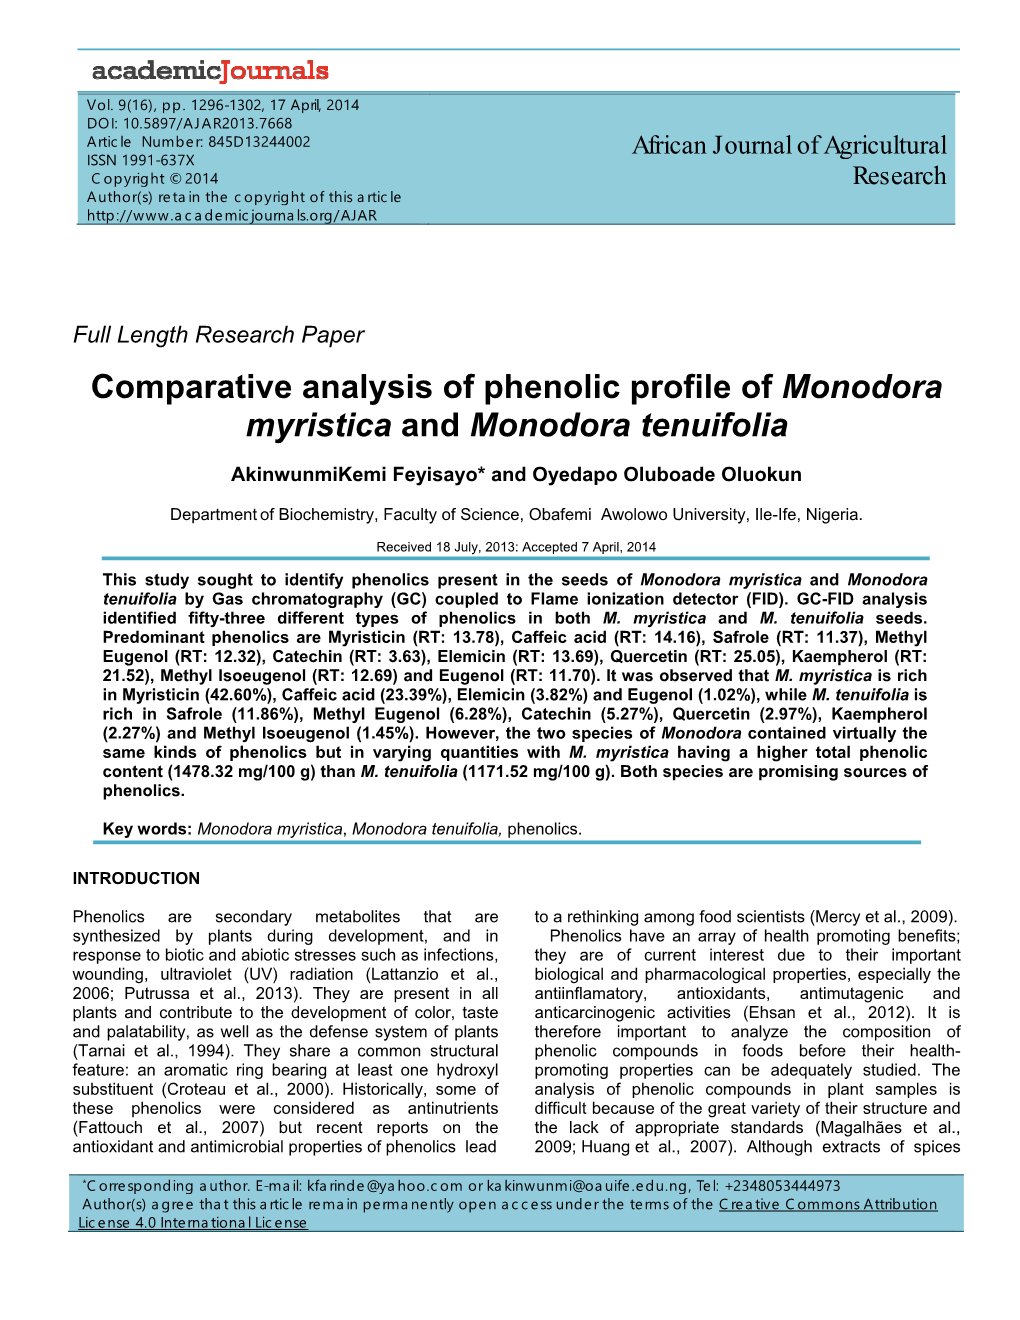 Comparative Analysis of Phenolic Profile of Monodora Myristica and Monodora Tenuifolia